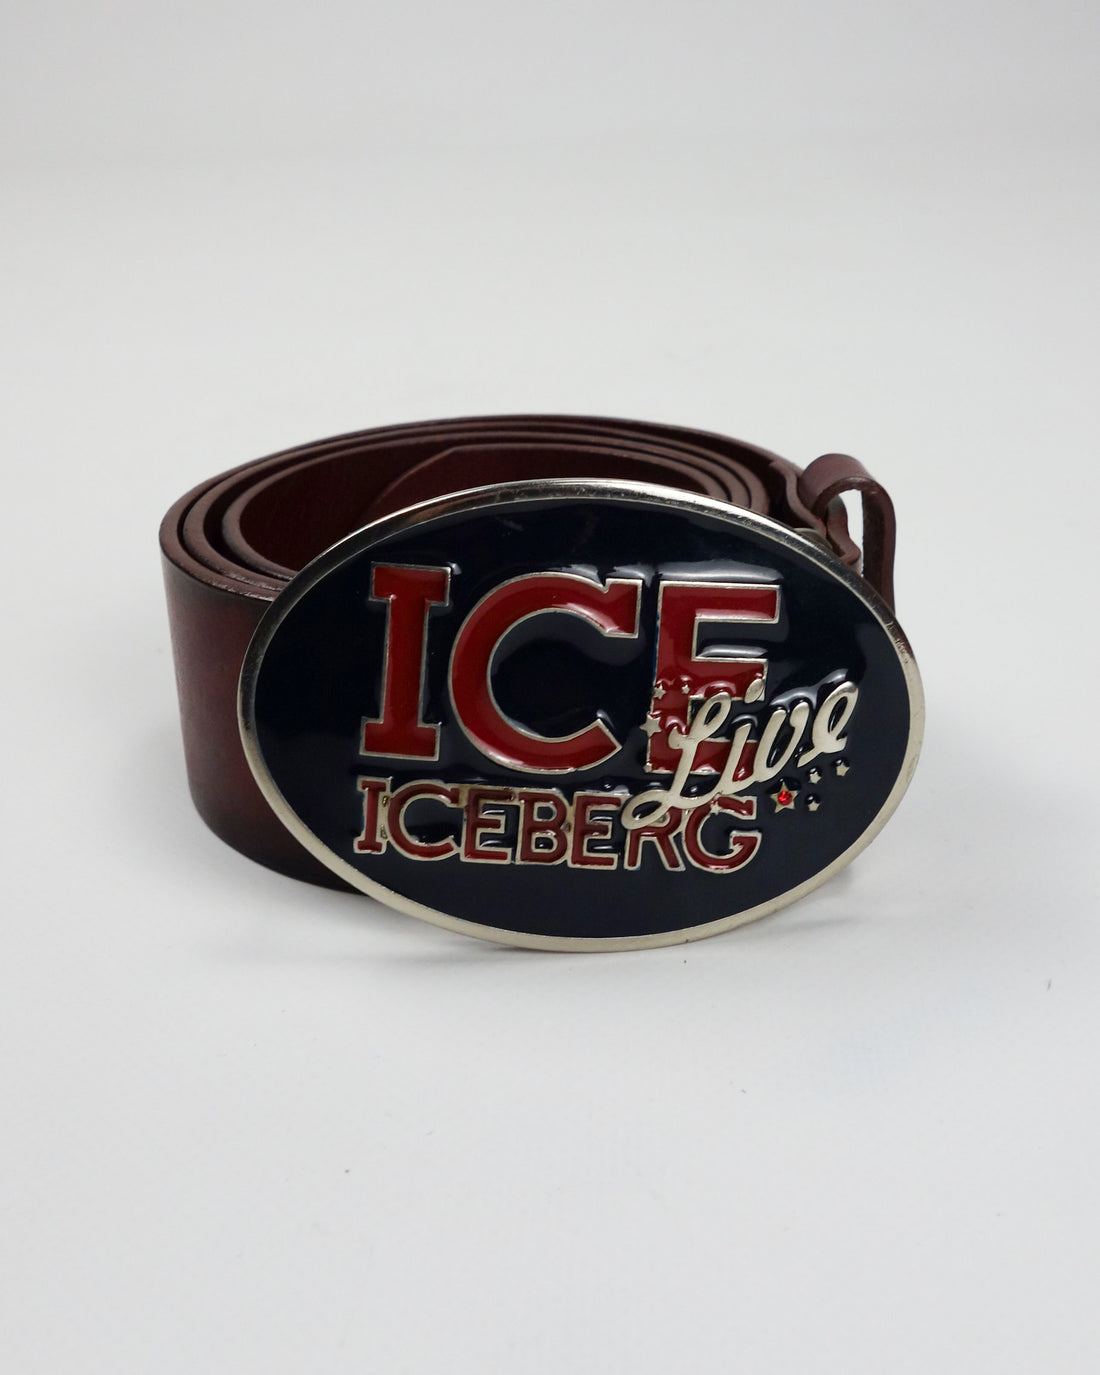 Iceberg "Ice Live" Brown Leather Belt 2000's